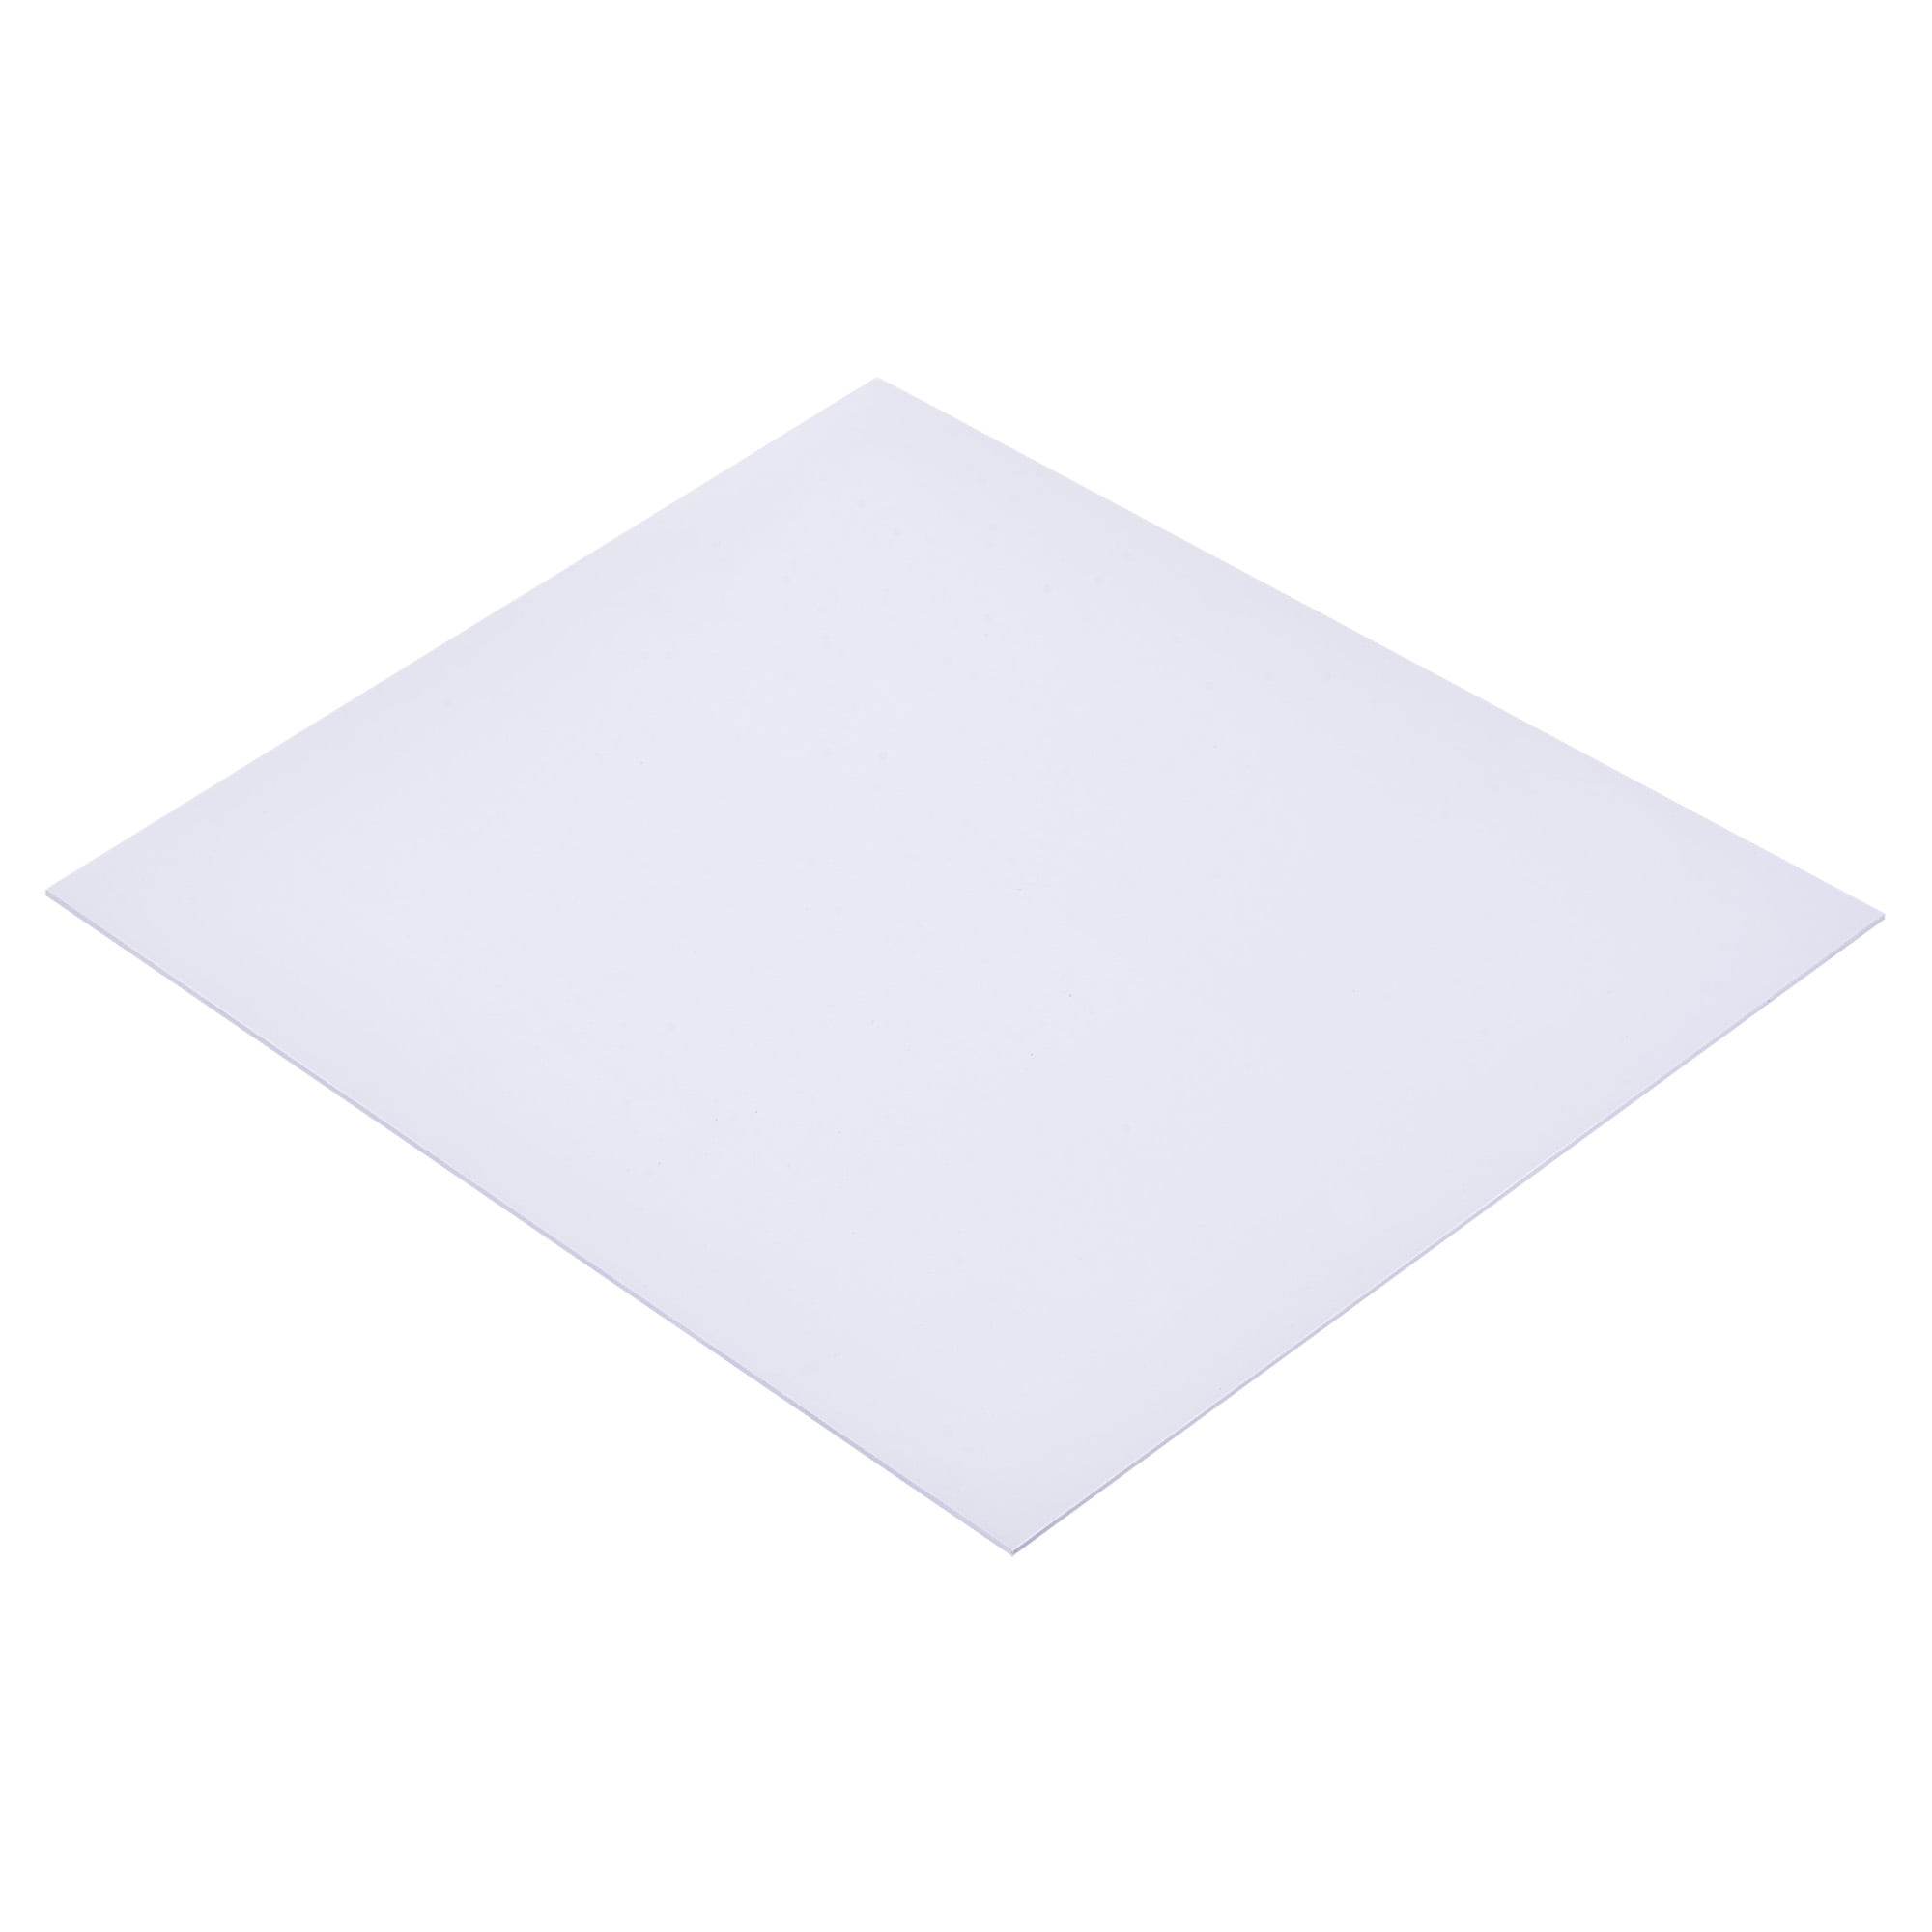 White ABS Plastic Sheet Panel For DIY Model Building Art Craft  Multi Sizes 